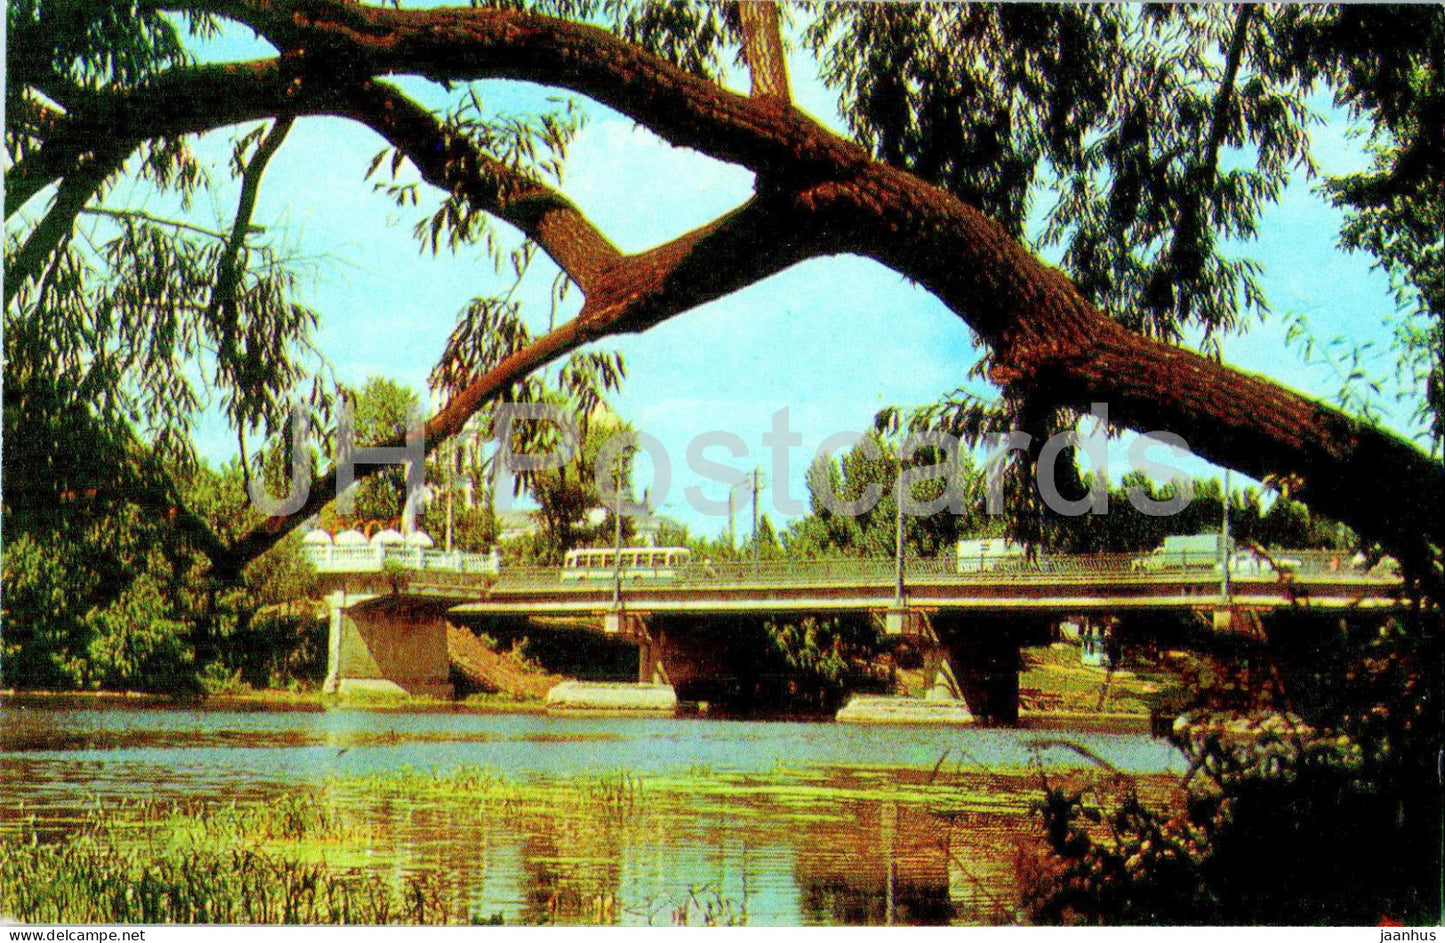 Sumy - Bridge over river Psel - 1976 - Ukraine USSR - unused - JH Postcards